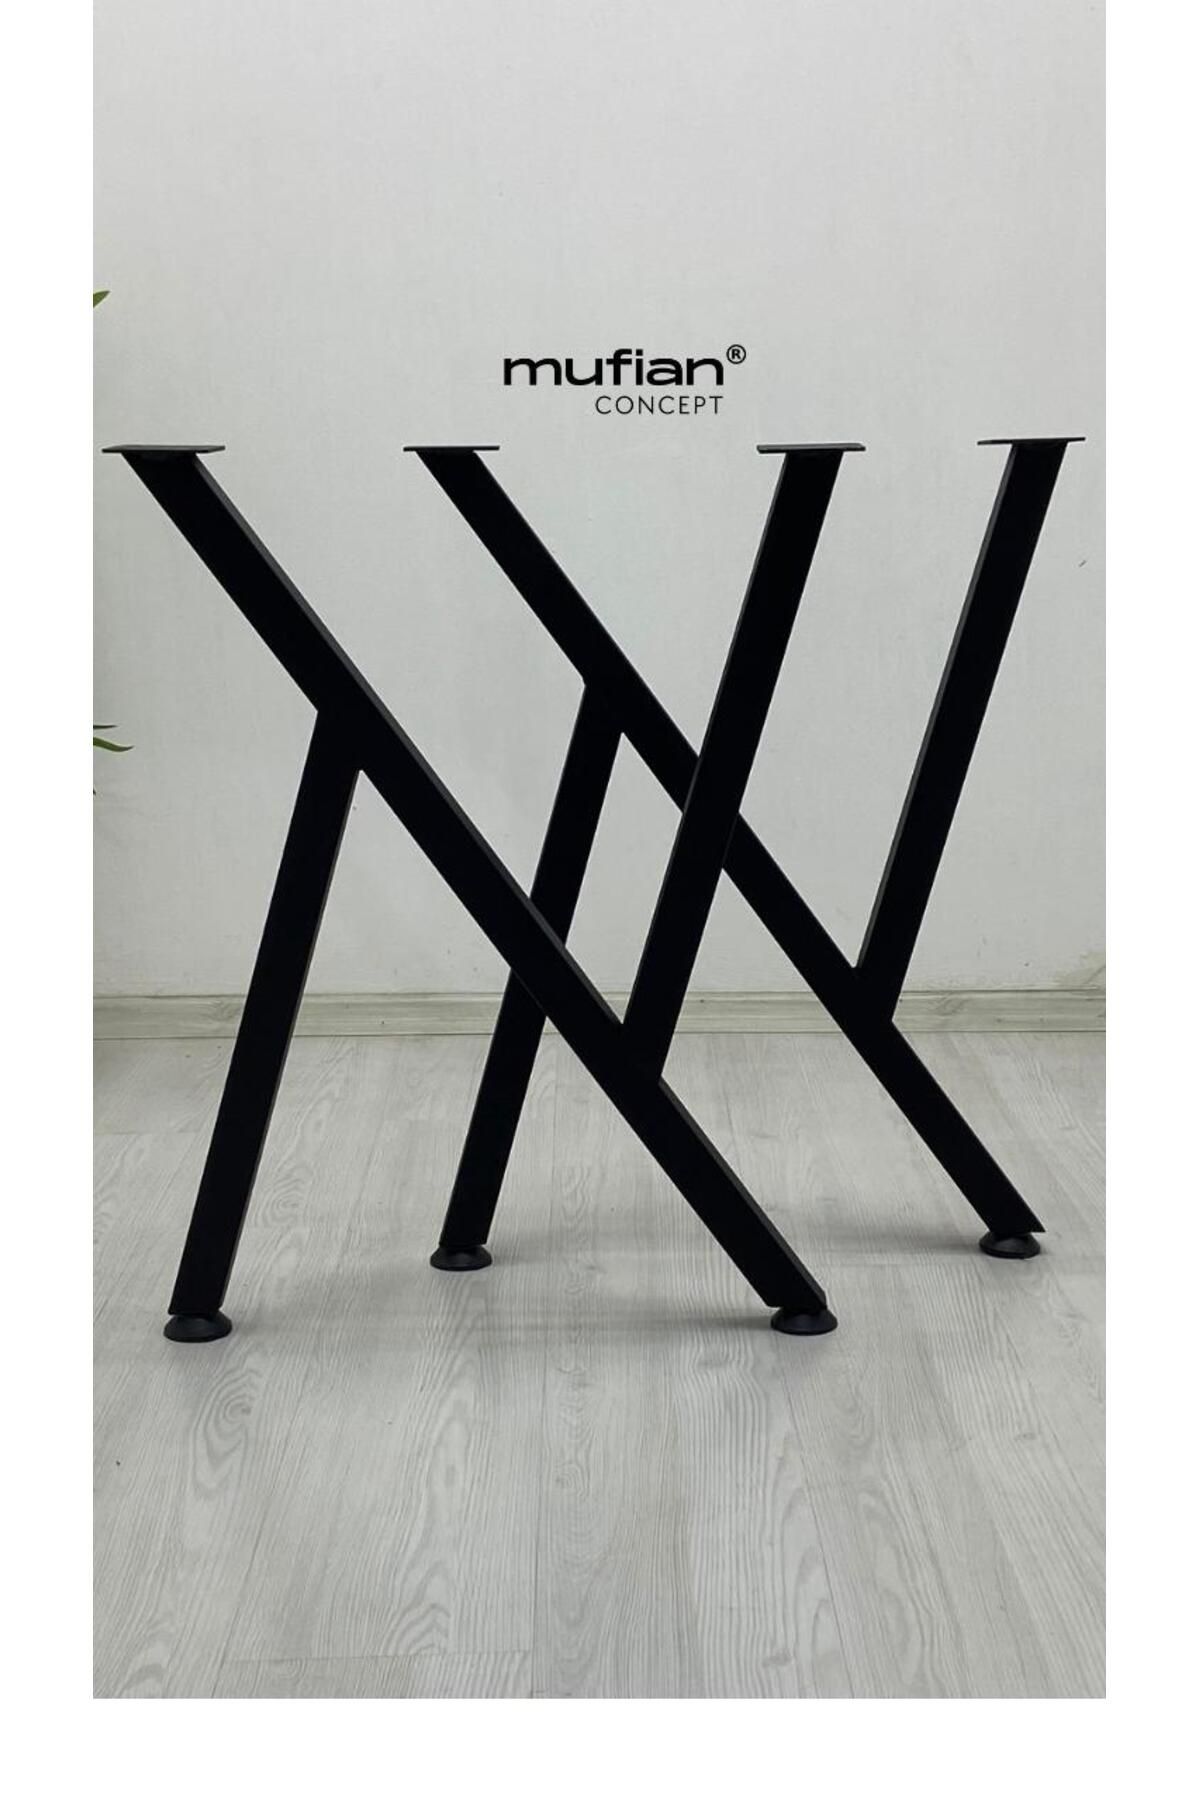 Mufian Concept LOTUS - Metal Mutfak Masası - Yemek Masası - Çalışma Masası - Balkon Masası Ayağı 2 Adet Ayak 73 Cm